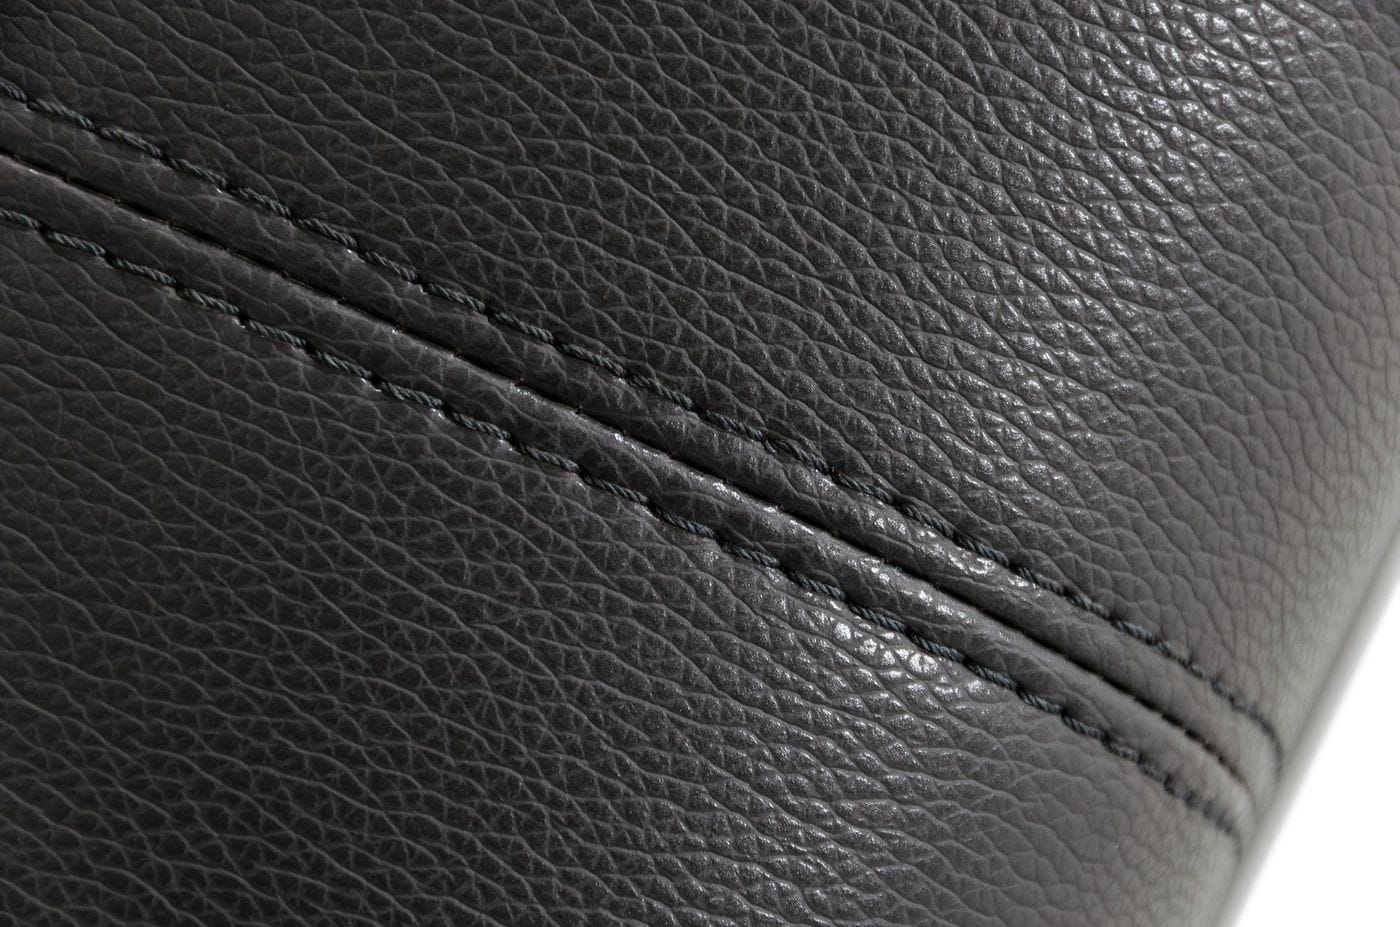 VIG Furniture Divani Casa Maine Grey Leather Right Sectional Sofa Recliner